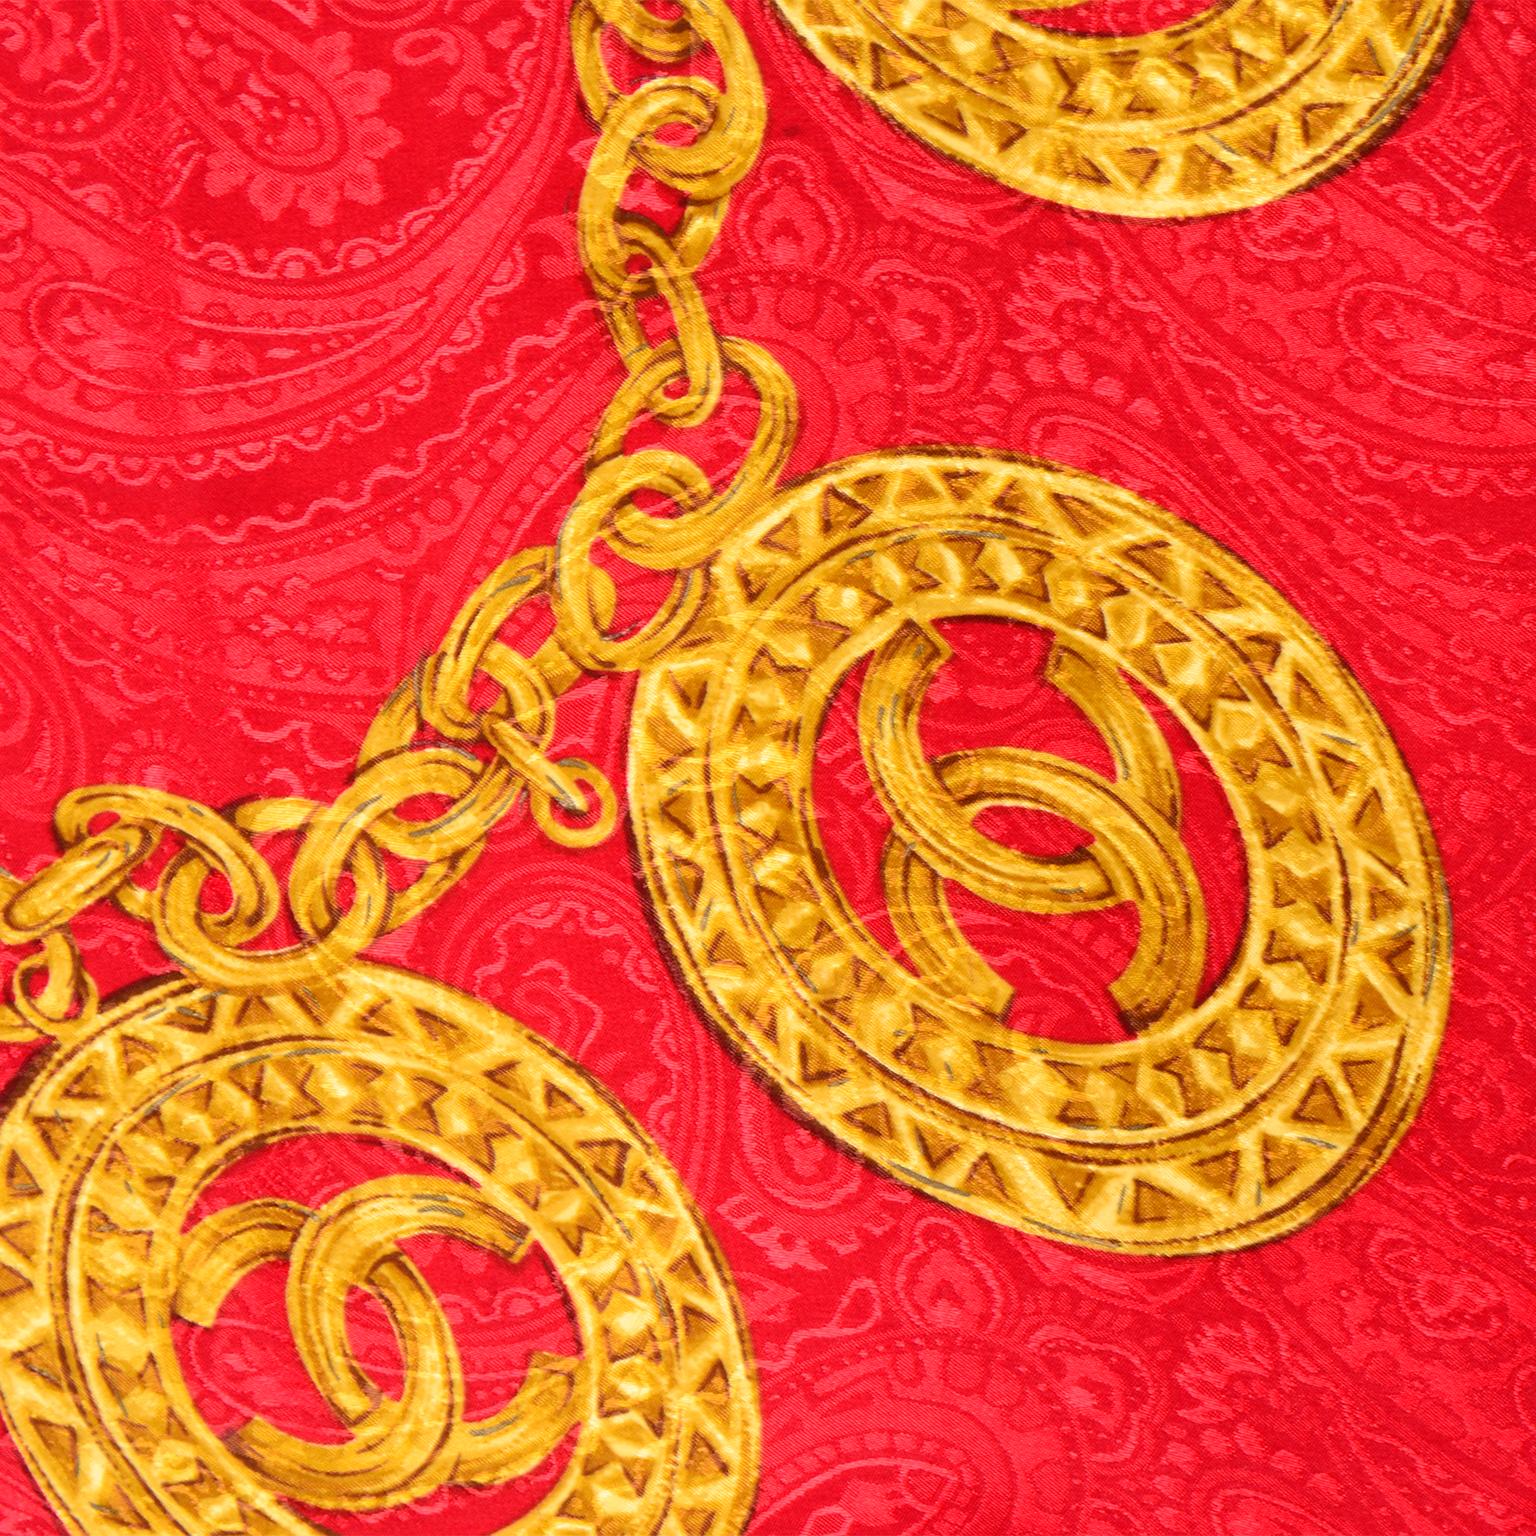 Vintage Chanel Red Silk Scarf w Gold Monogram CC Medallion Chain Print 1